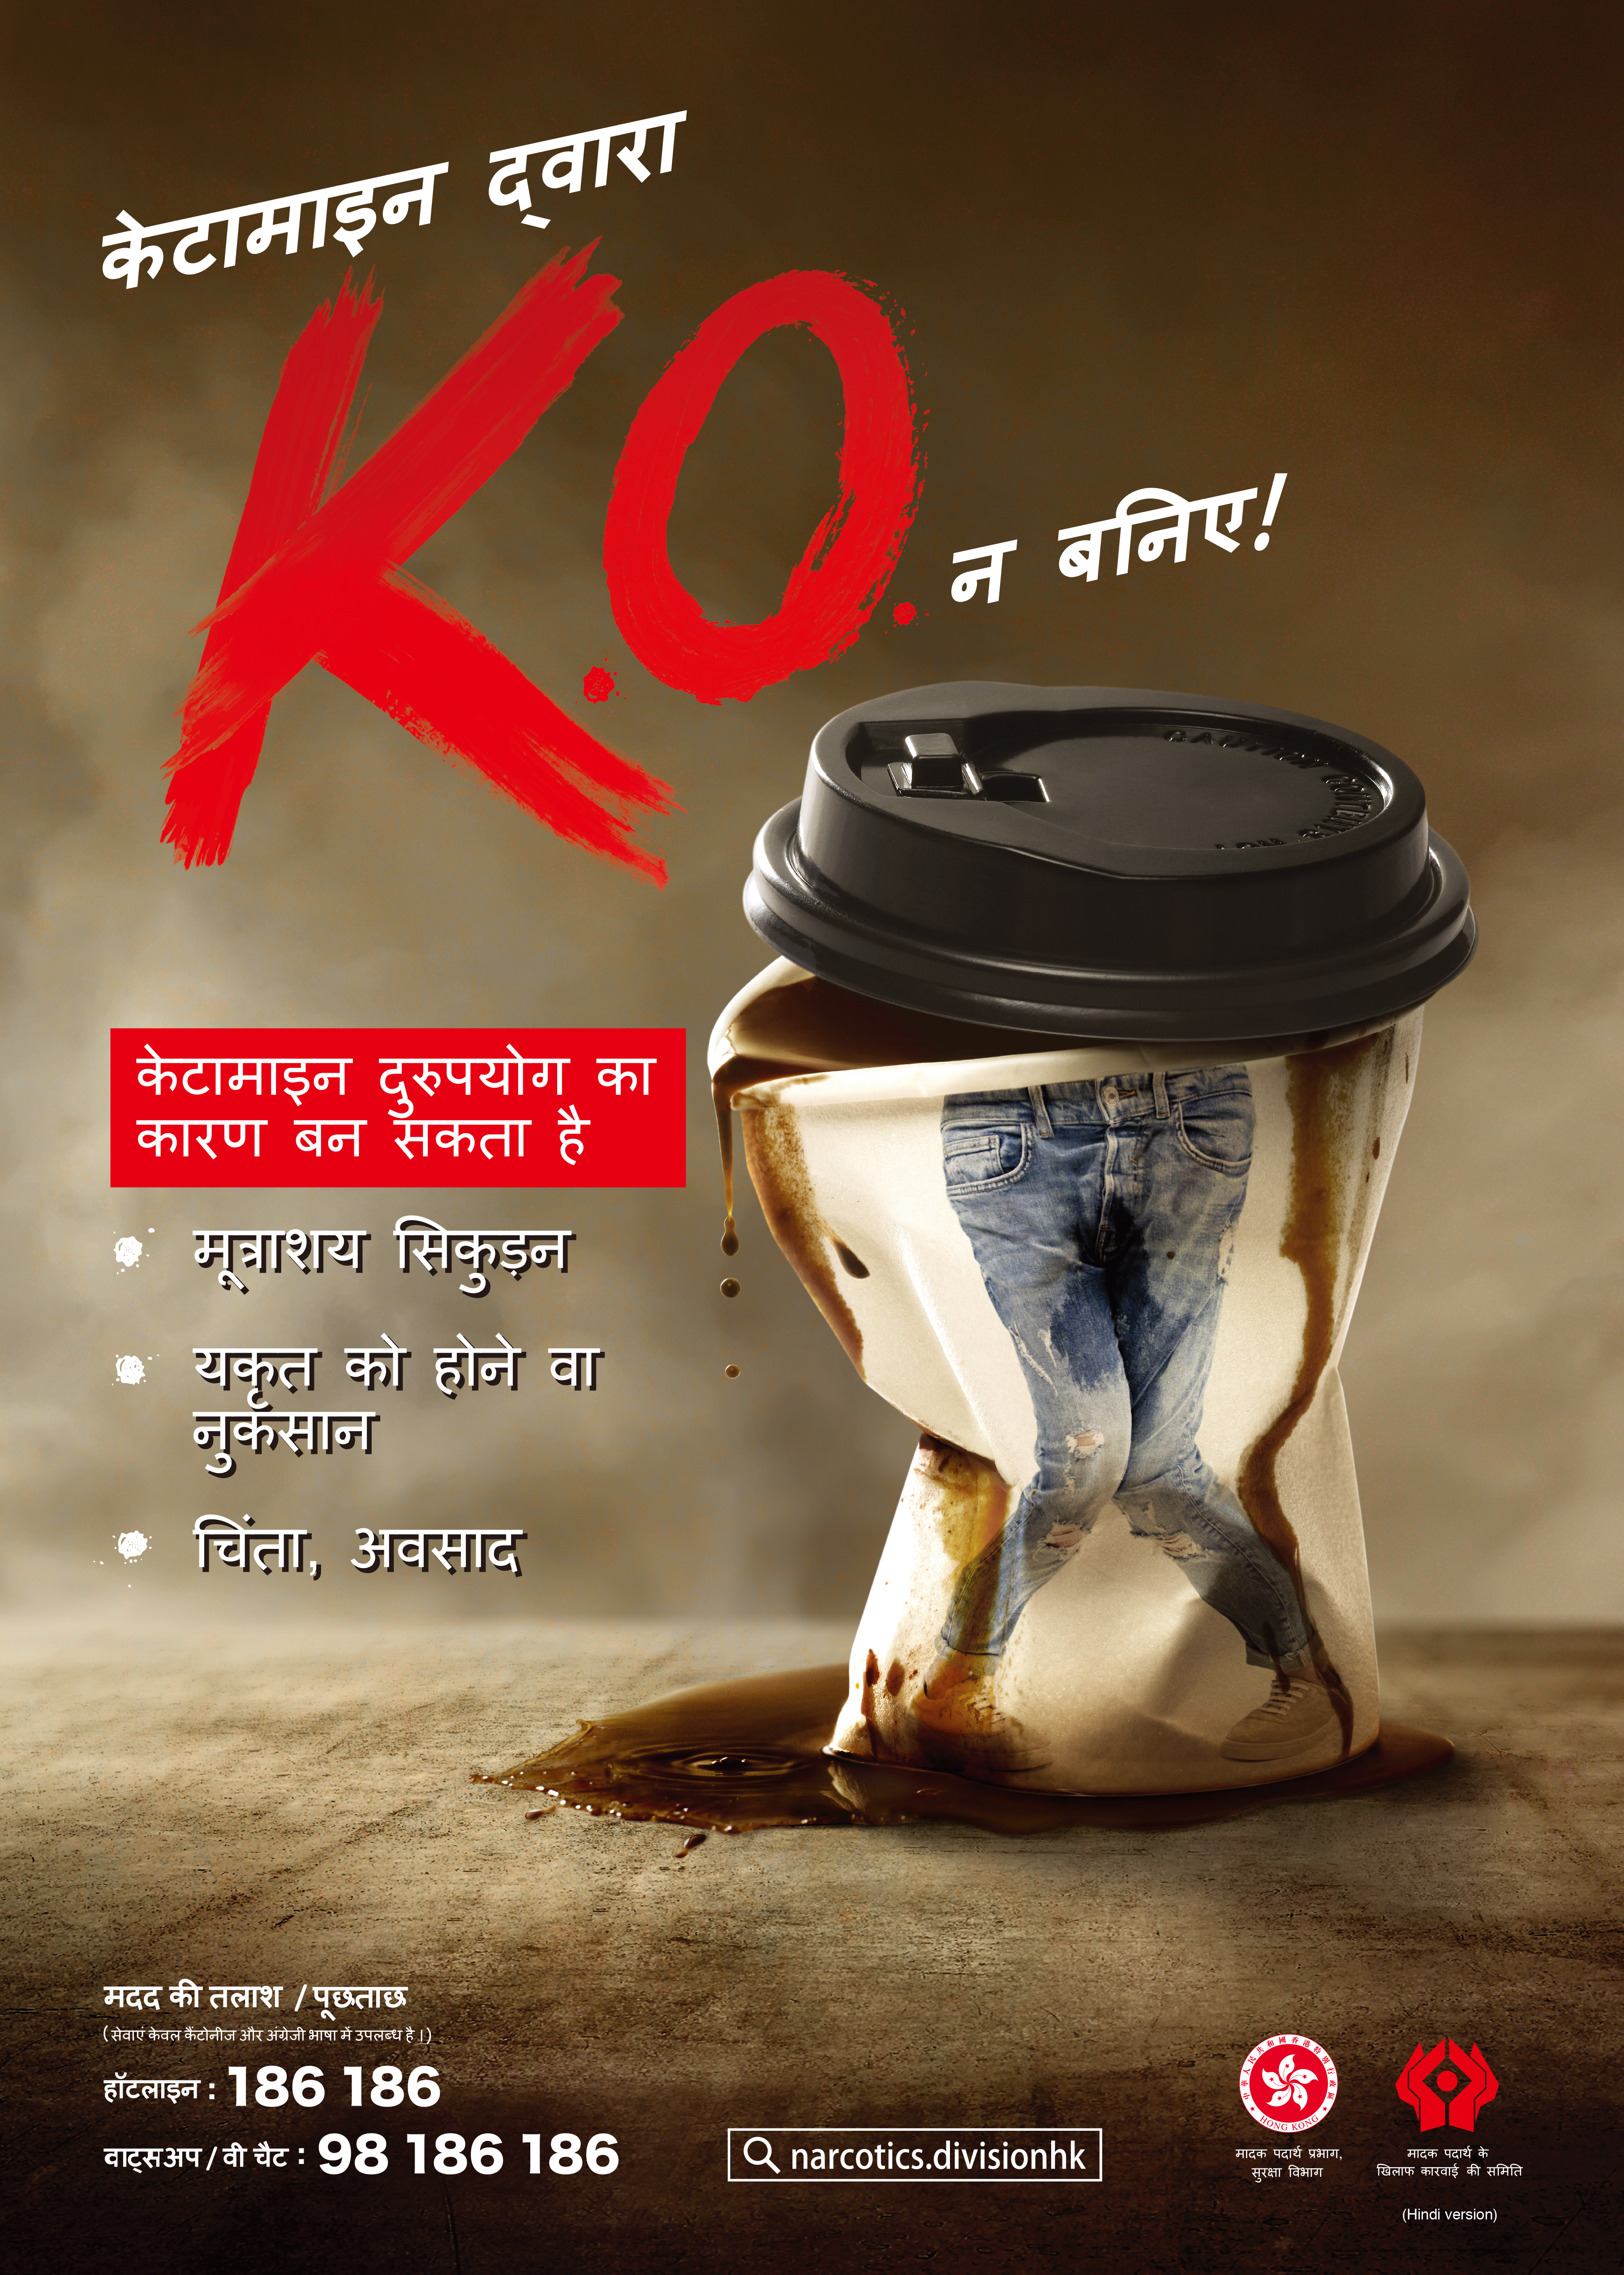 Anti-drug poster Don't be K.O.'d by Ketamine! - Hindi version 